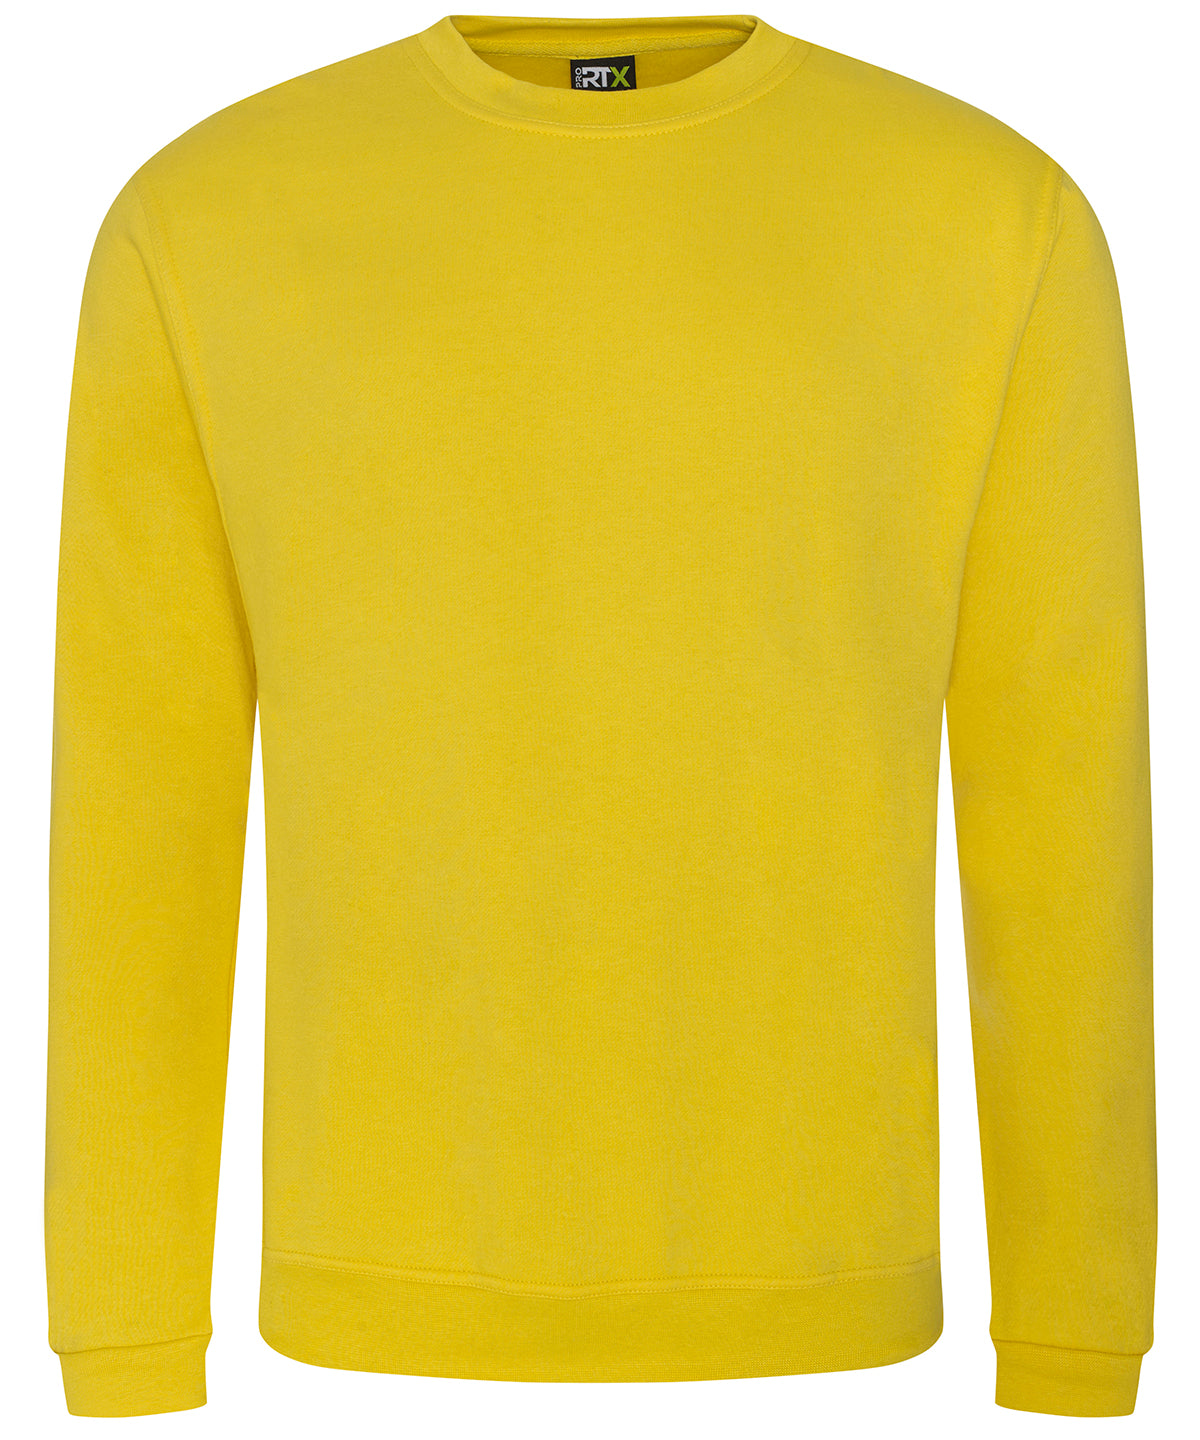 ProRTX Pro sweatshirt Yellow